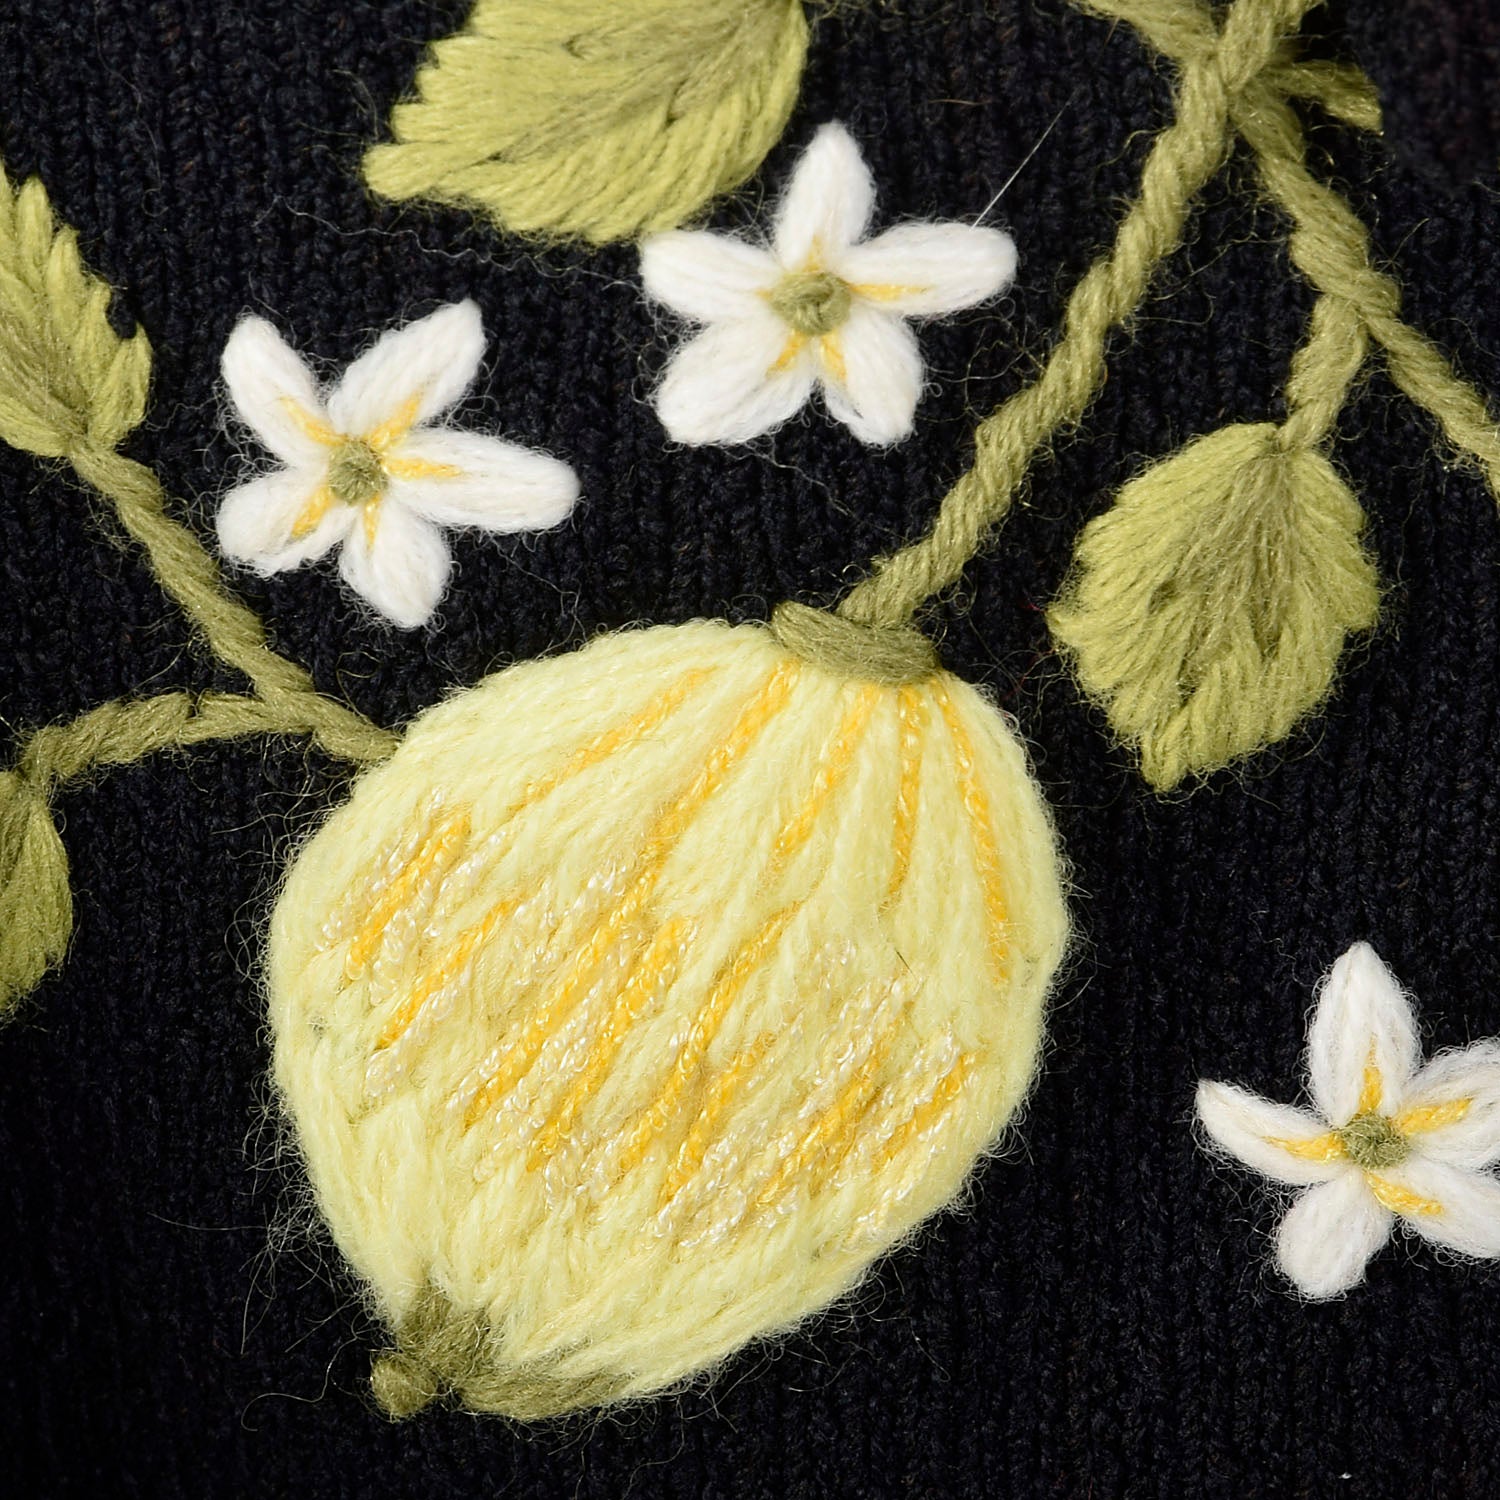 Medium 1970s Black Dress Yellow Floral Embroidery Long Sleeve Tie Waist Knit